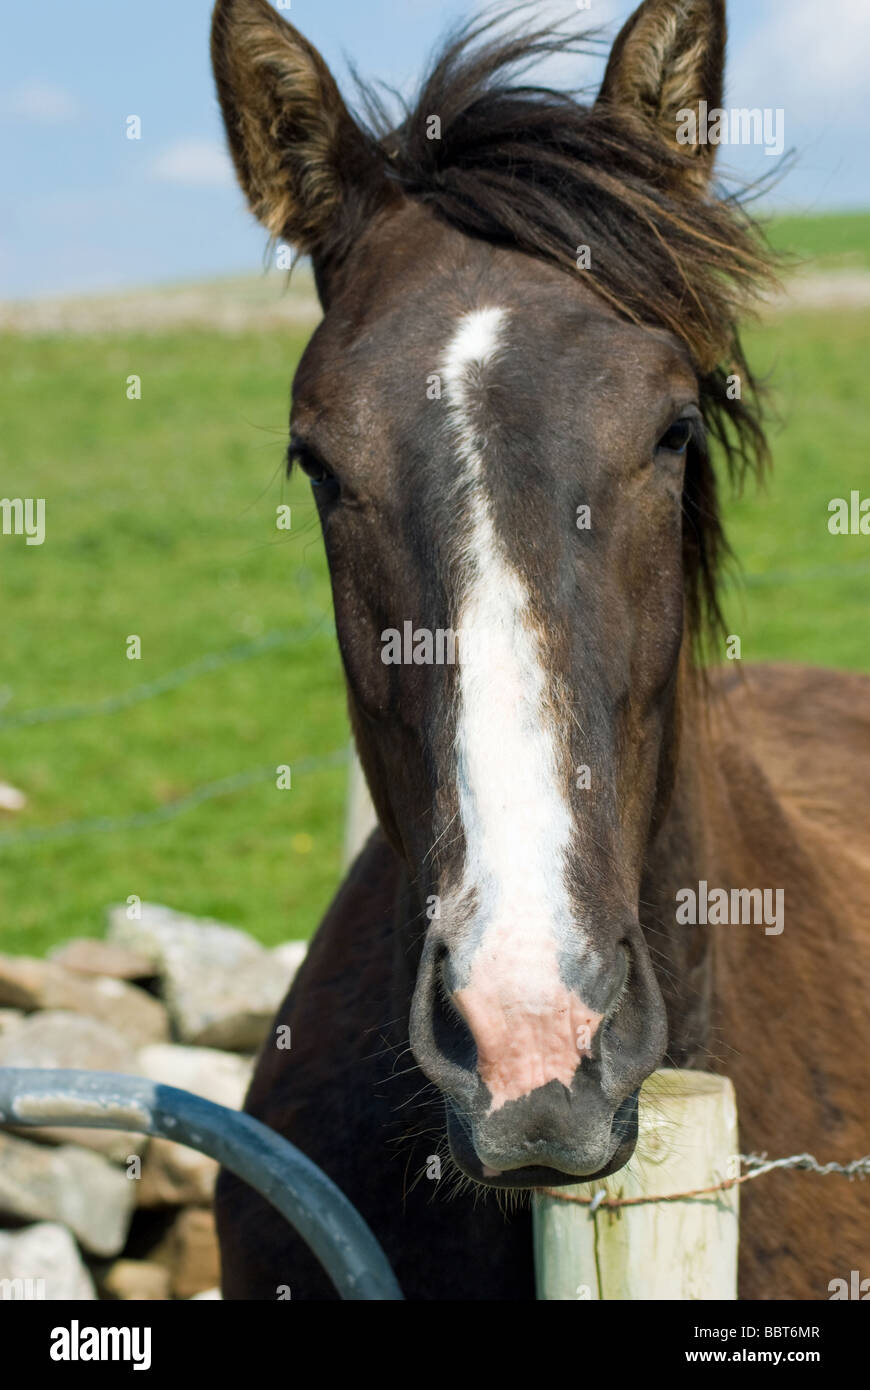 A horse in a field near the village of Mullaghmore, County Sligo, Ireland Stock Photo